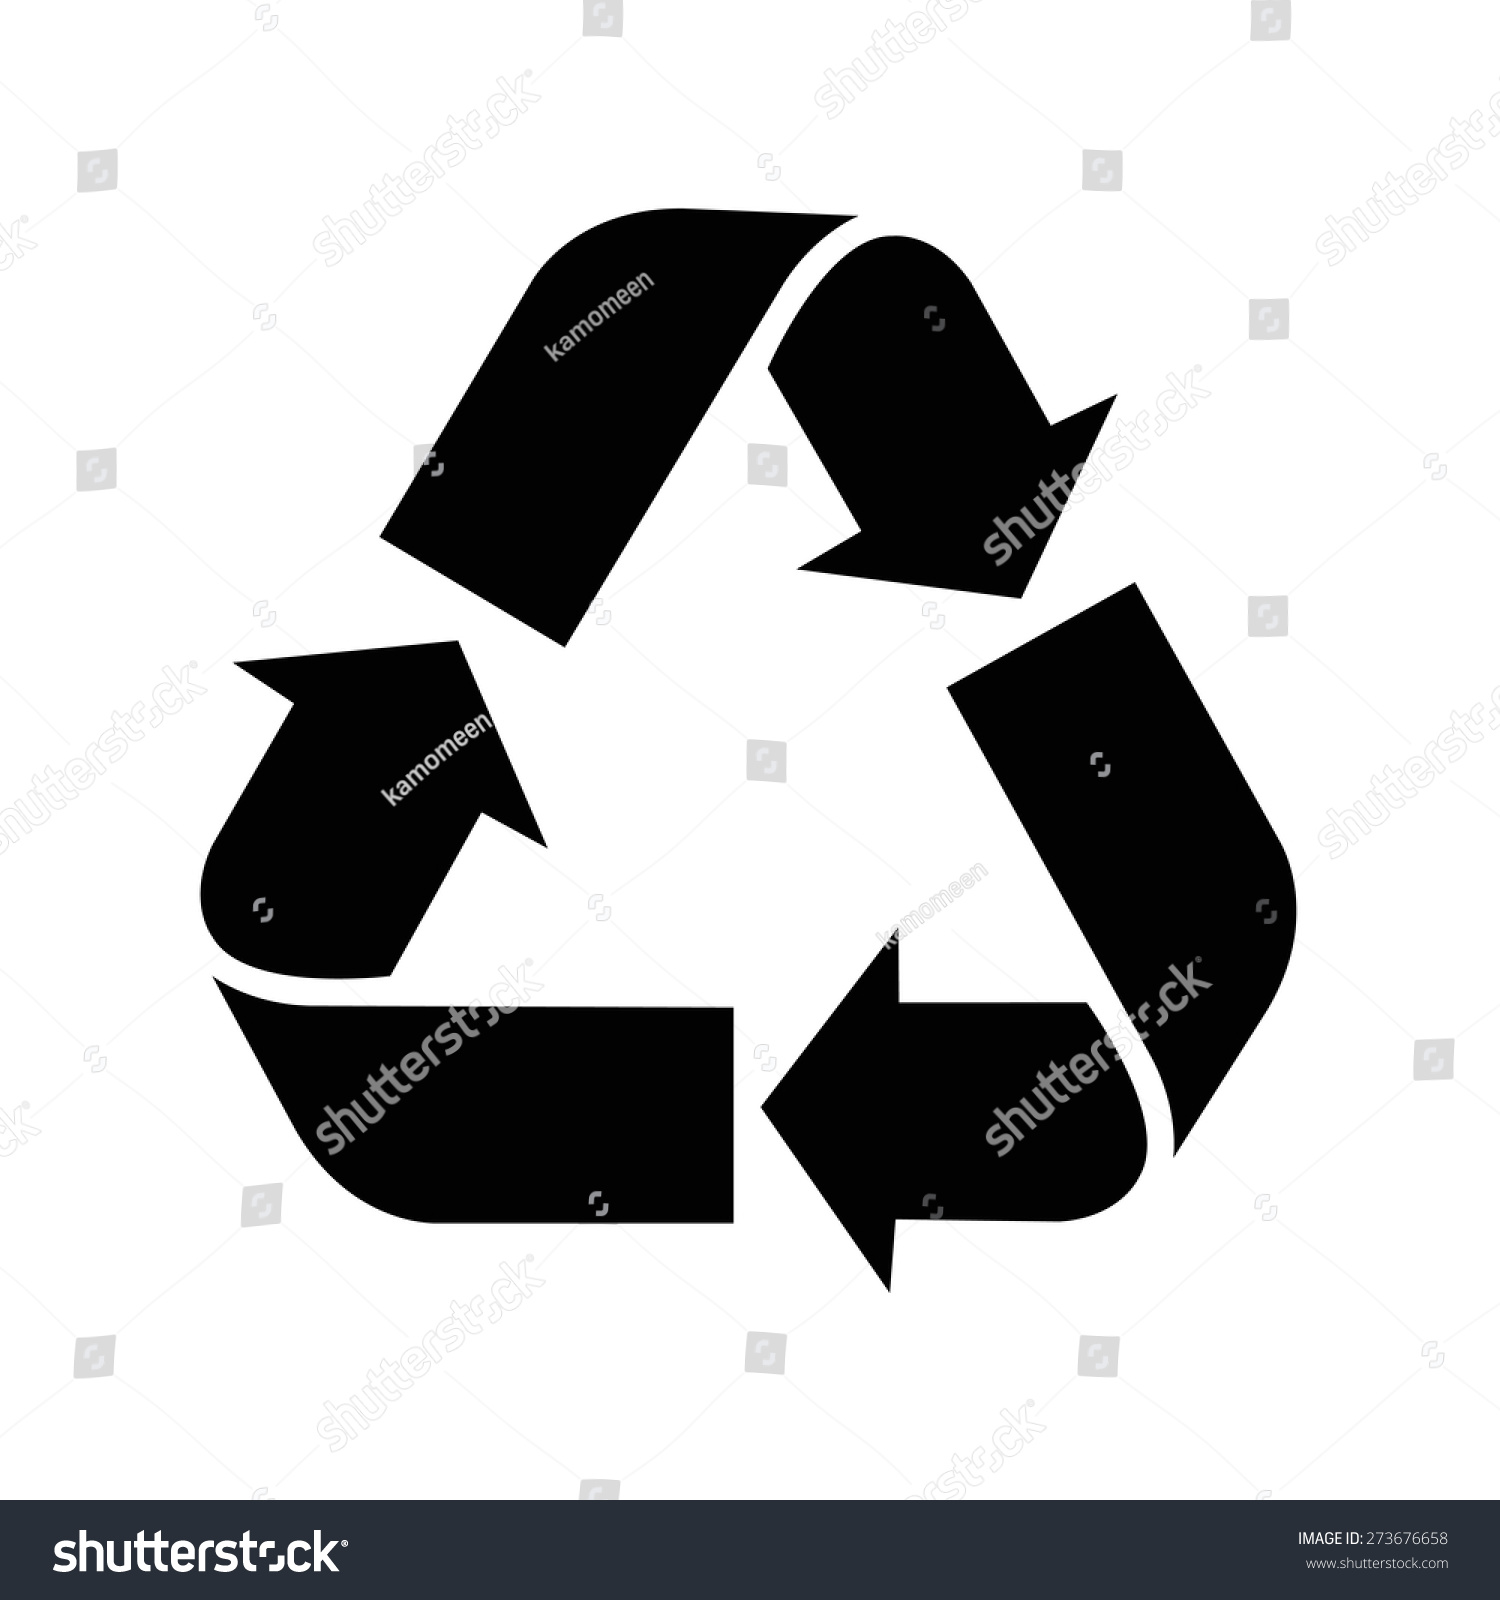 Recycle simbol #273676658